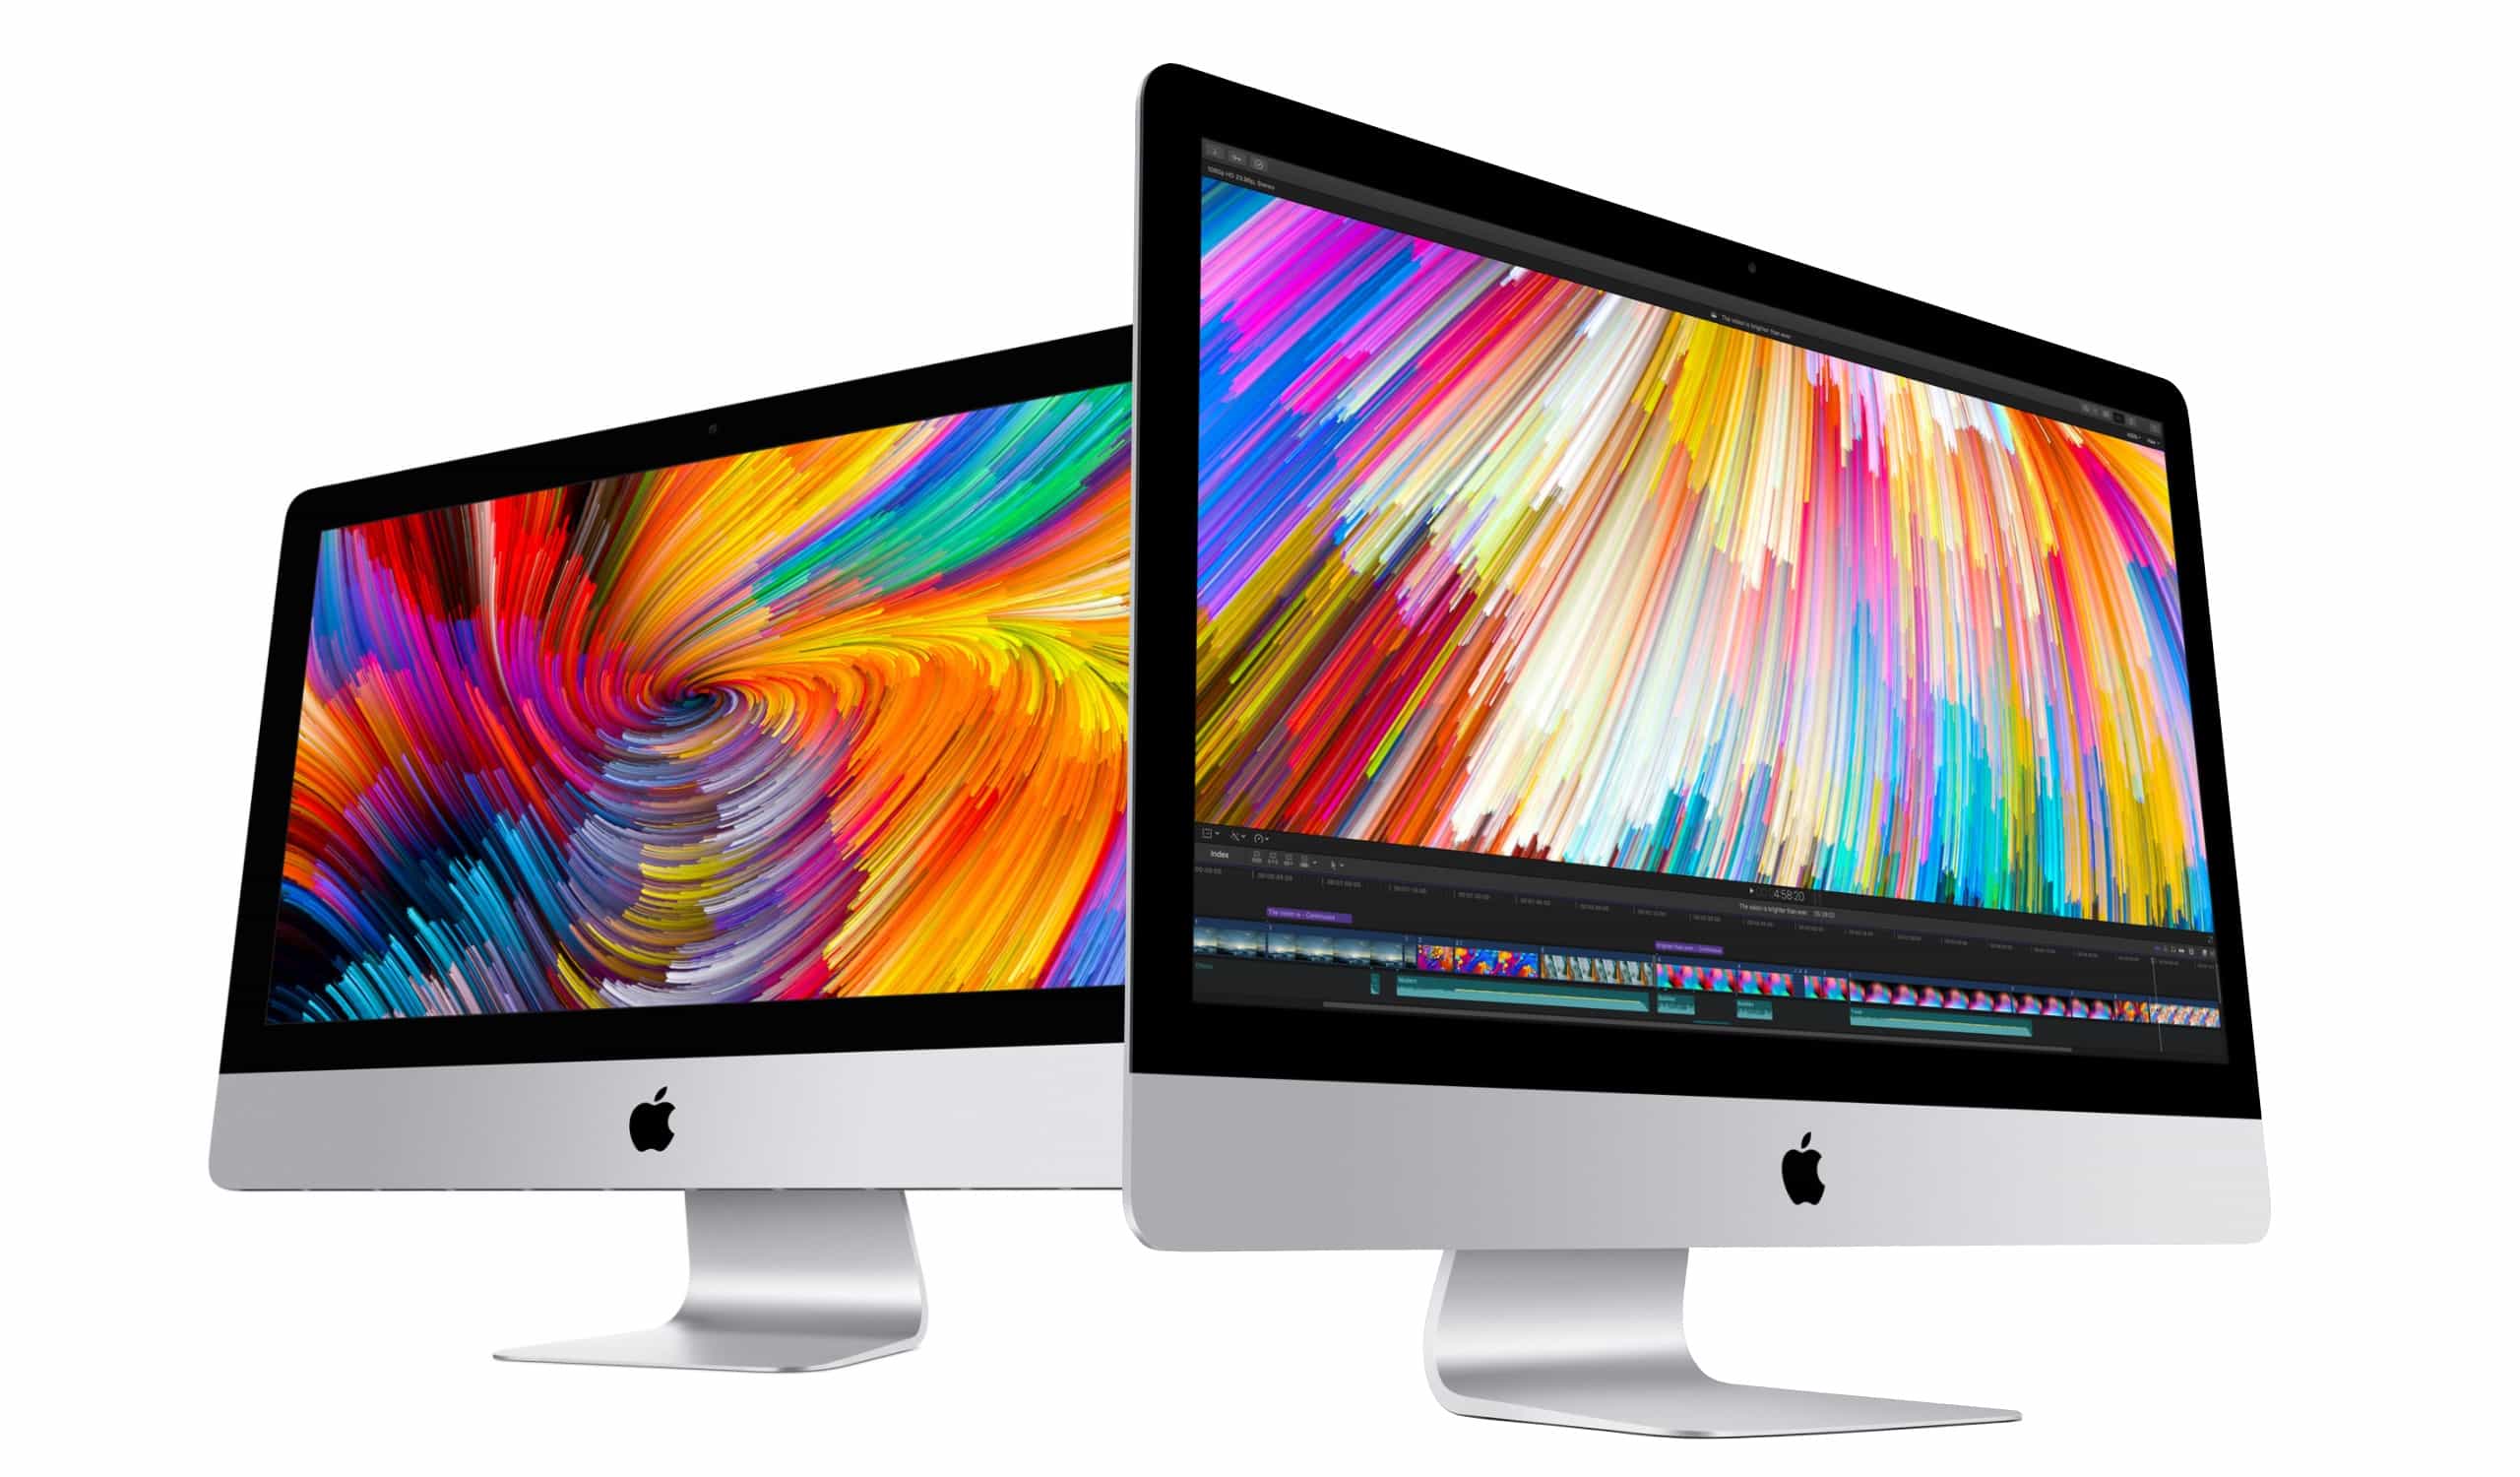 Save $200 on a new iMac